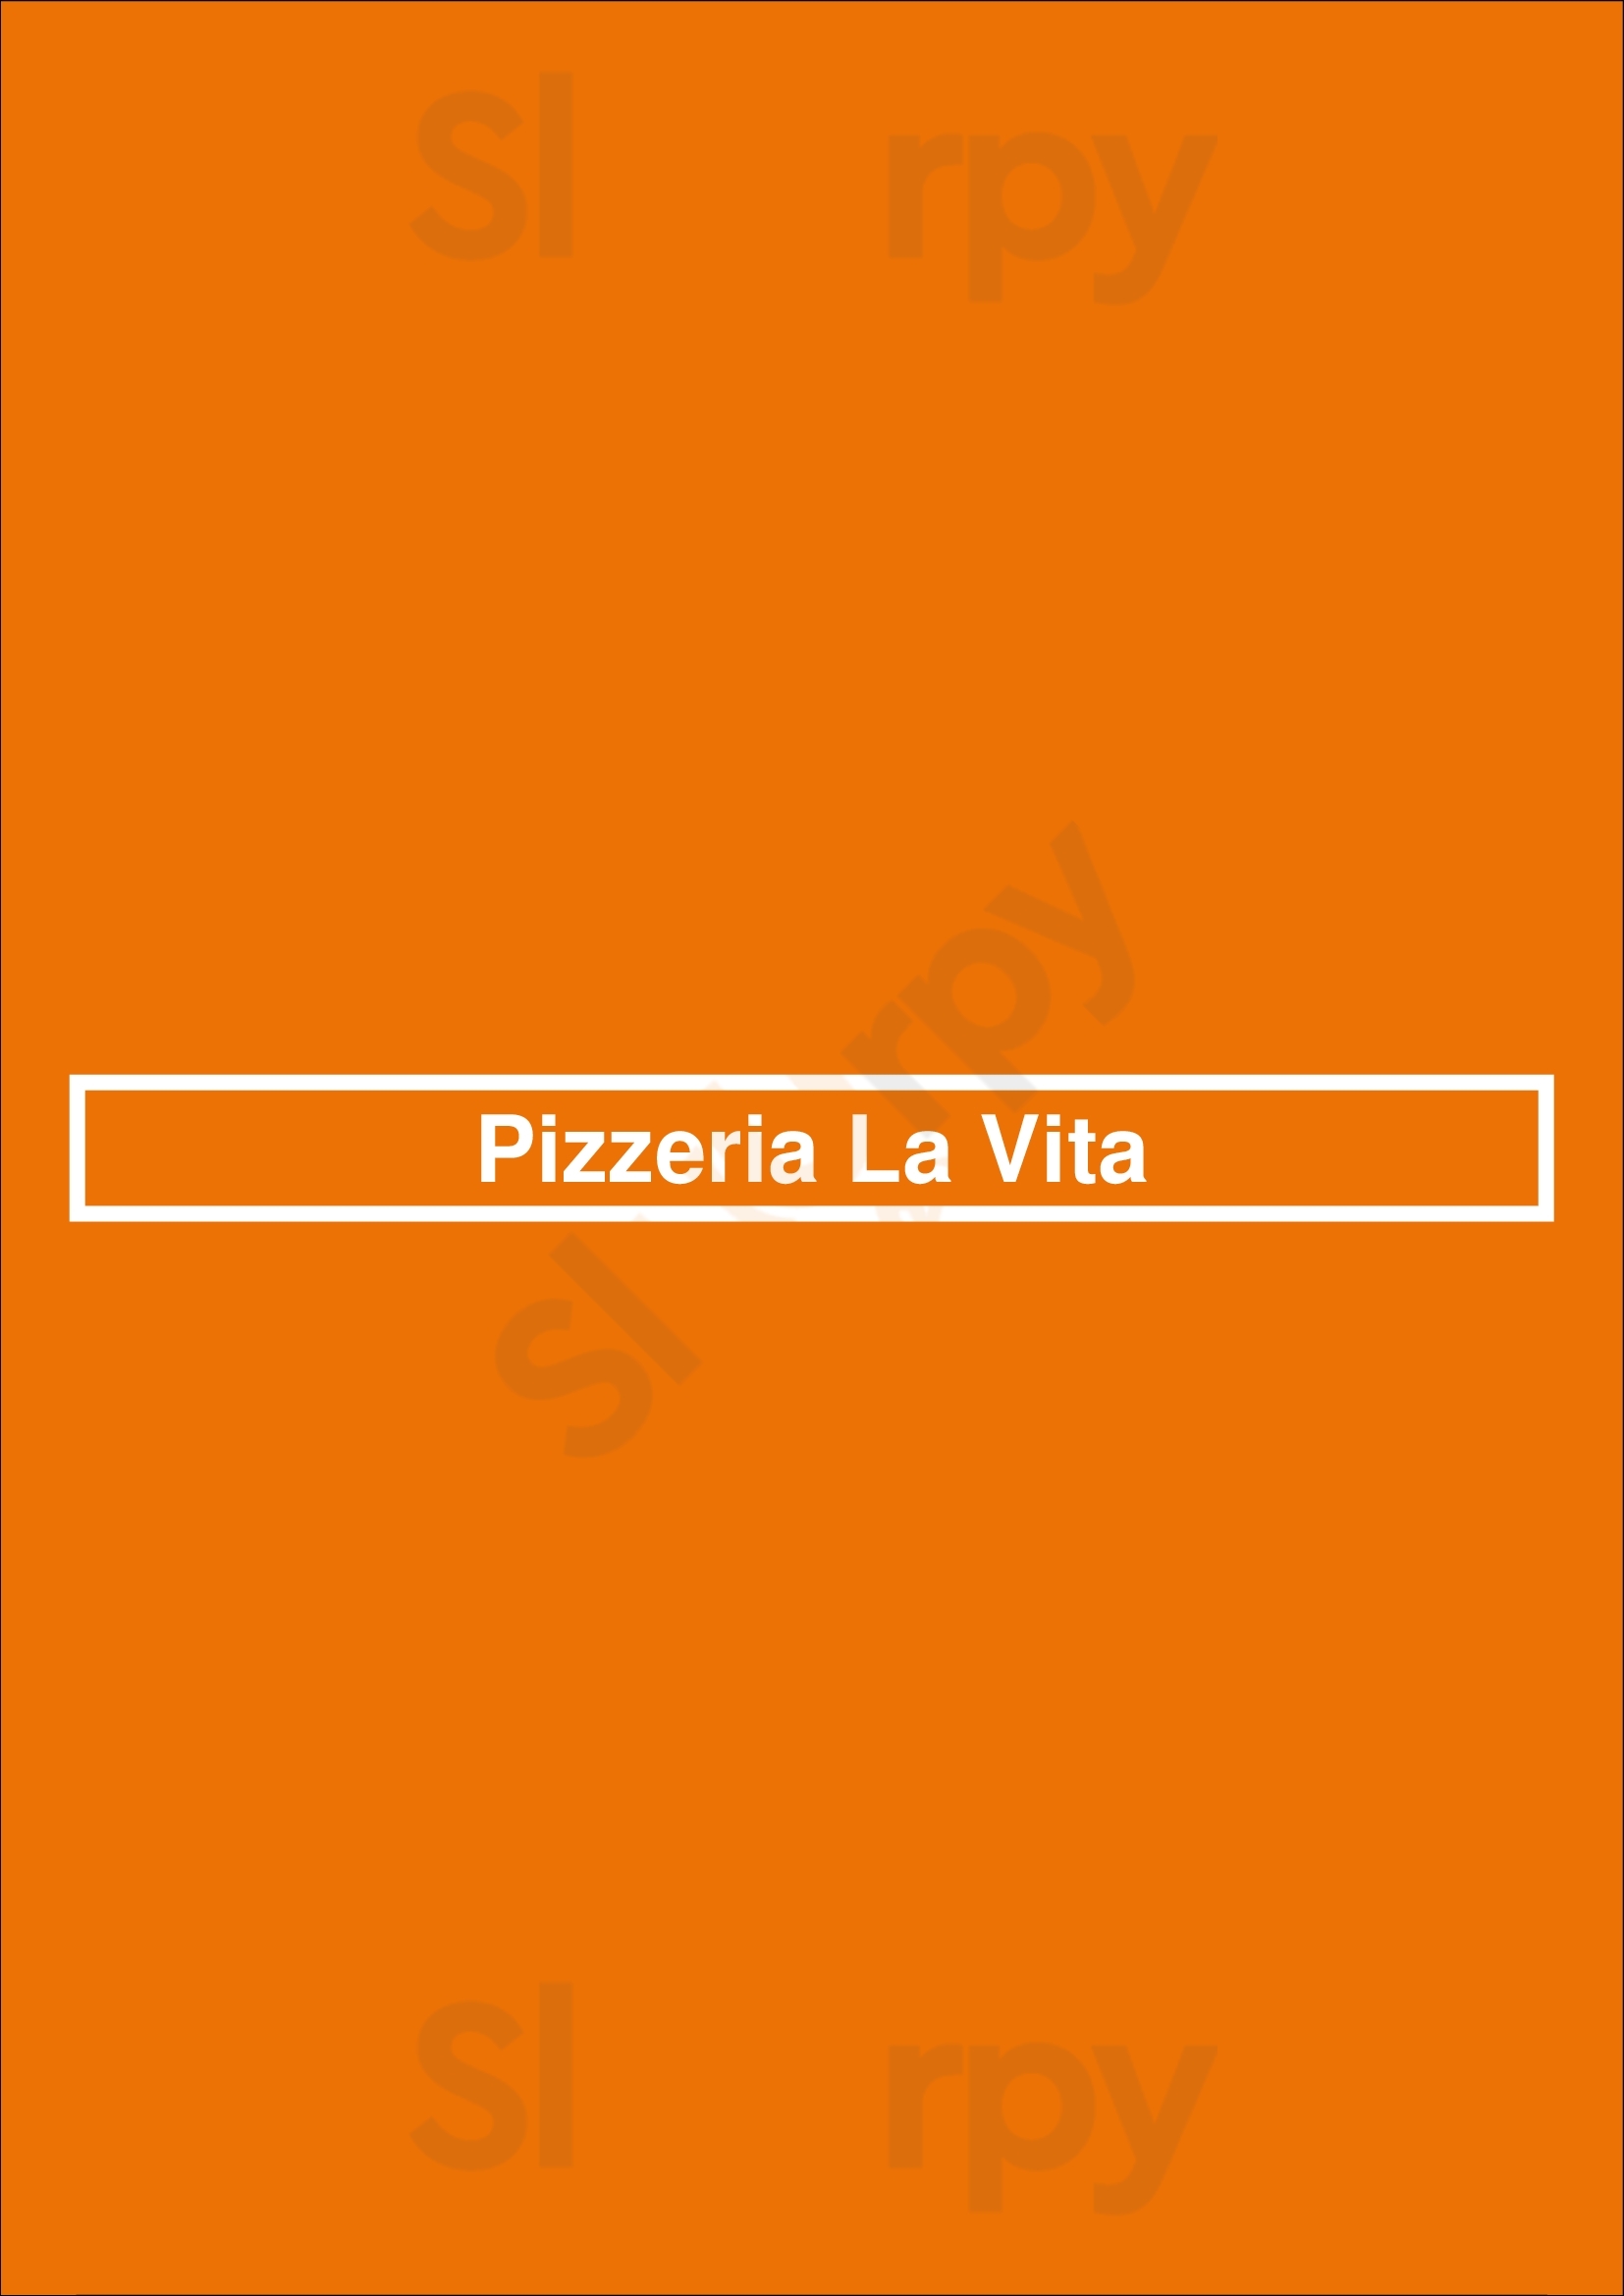 Pizzeria La Vita Amsterdam Menu - 1